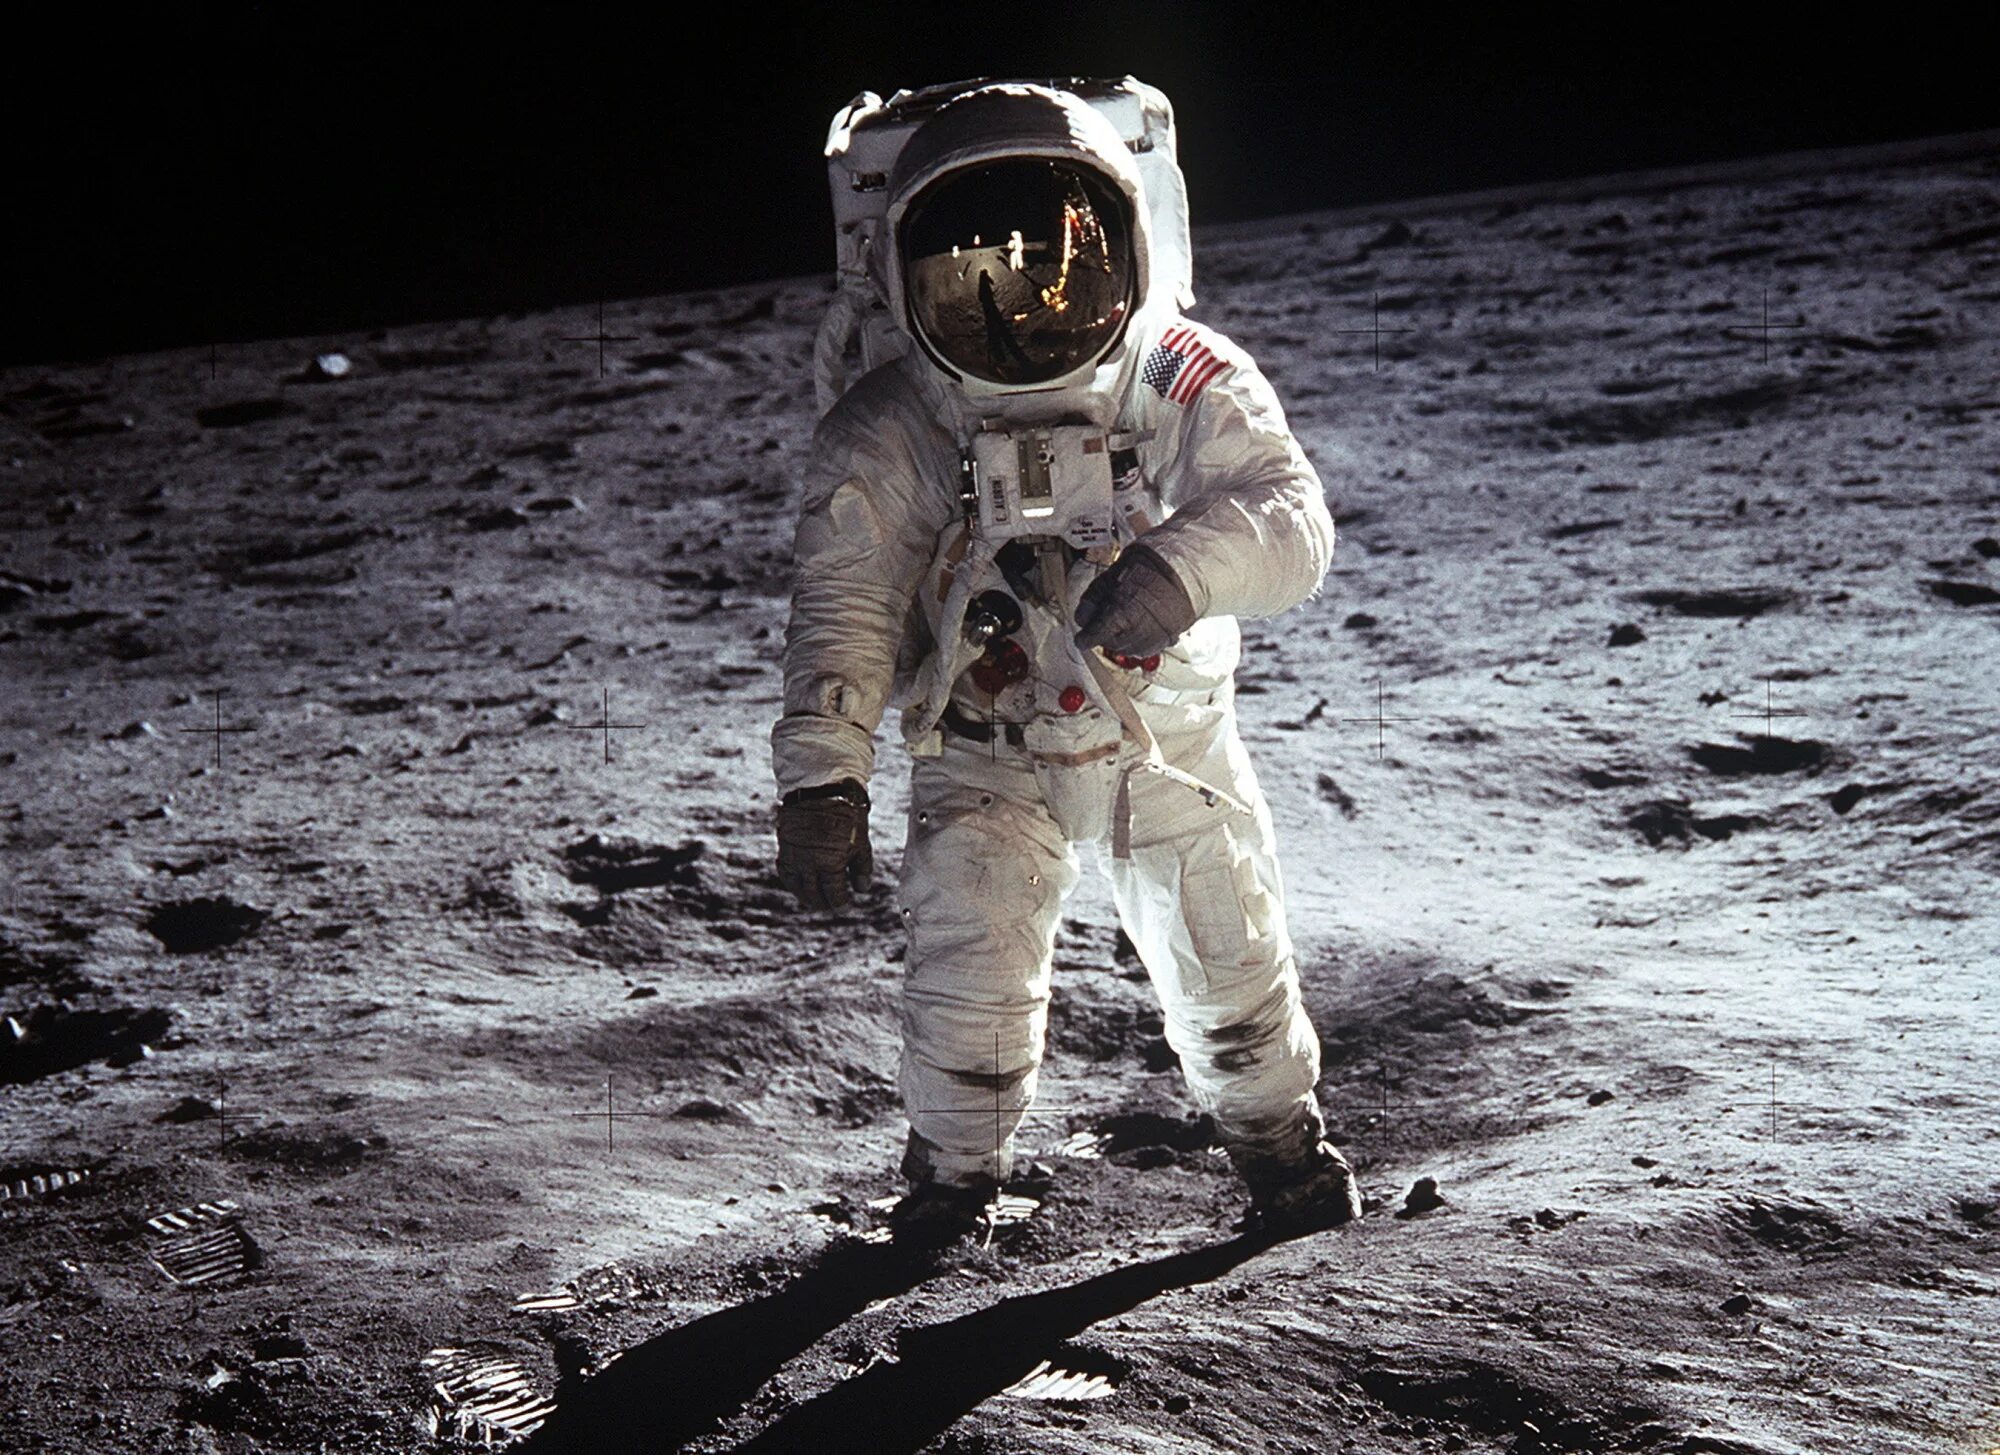 Аполлон 11. Man landed on the moon